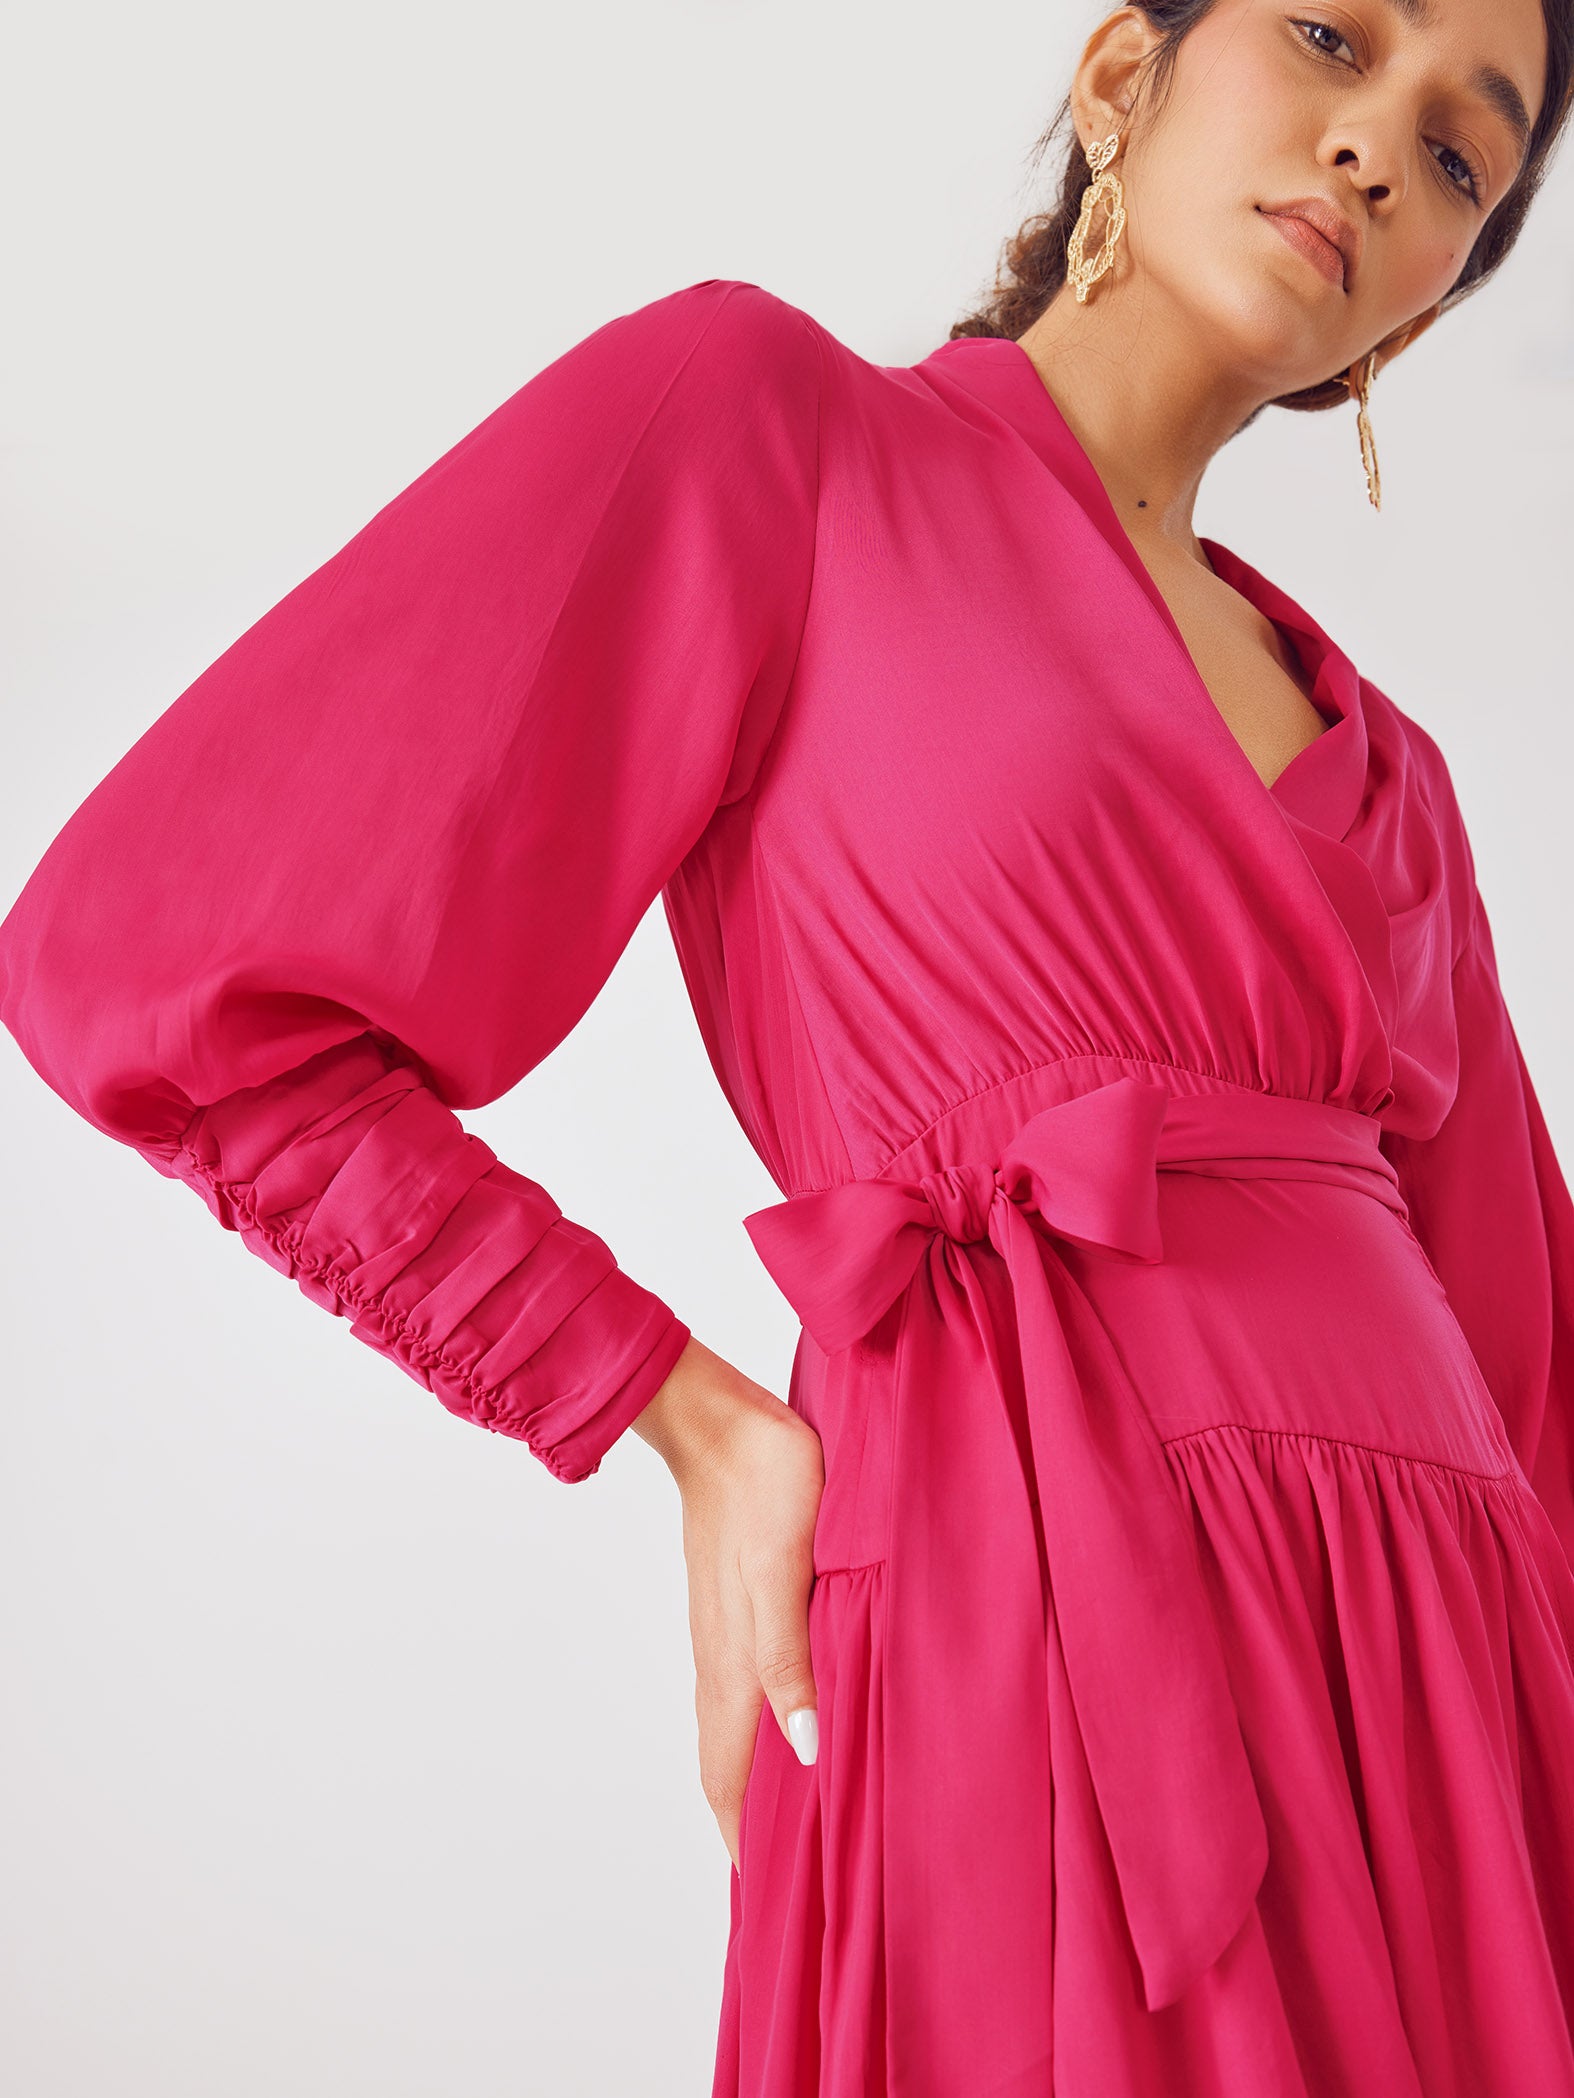 Hot Pink Shawl Collar Dress